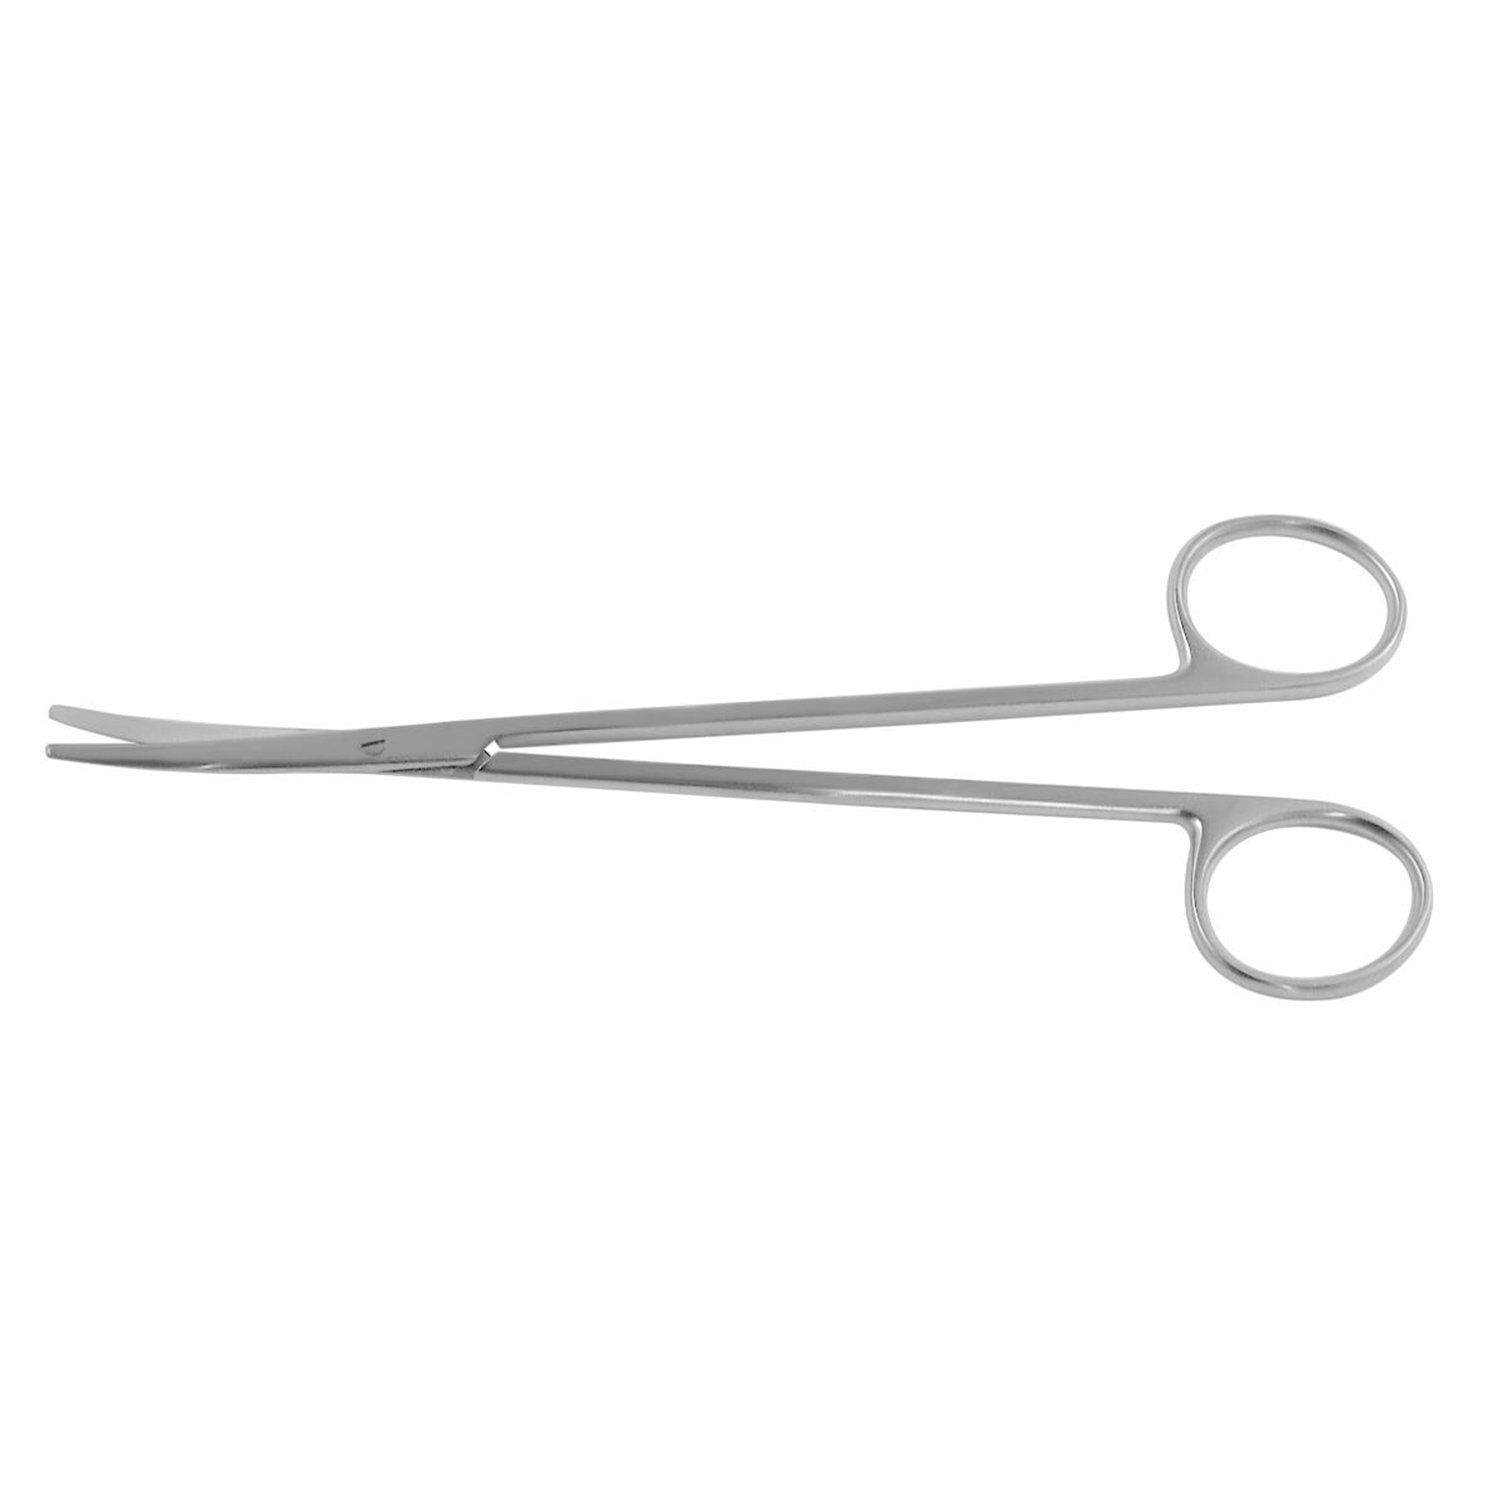 Metzenbaum Dissecting Scissors Straight/Curved